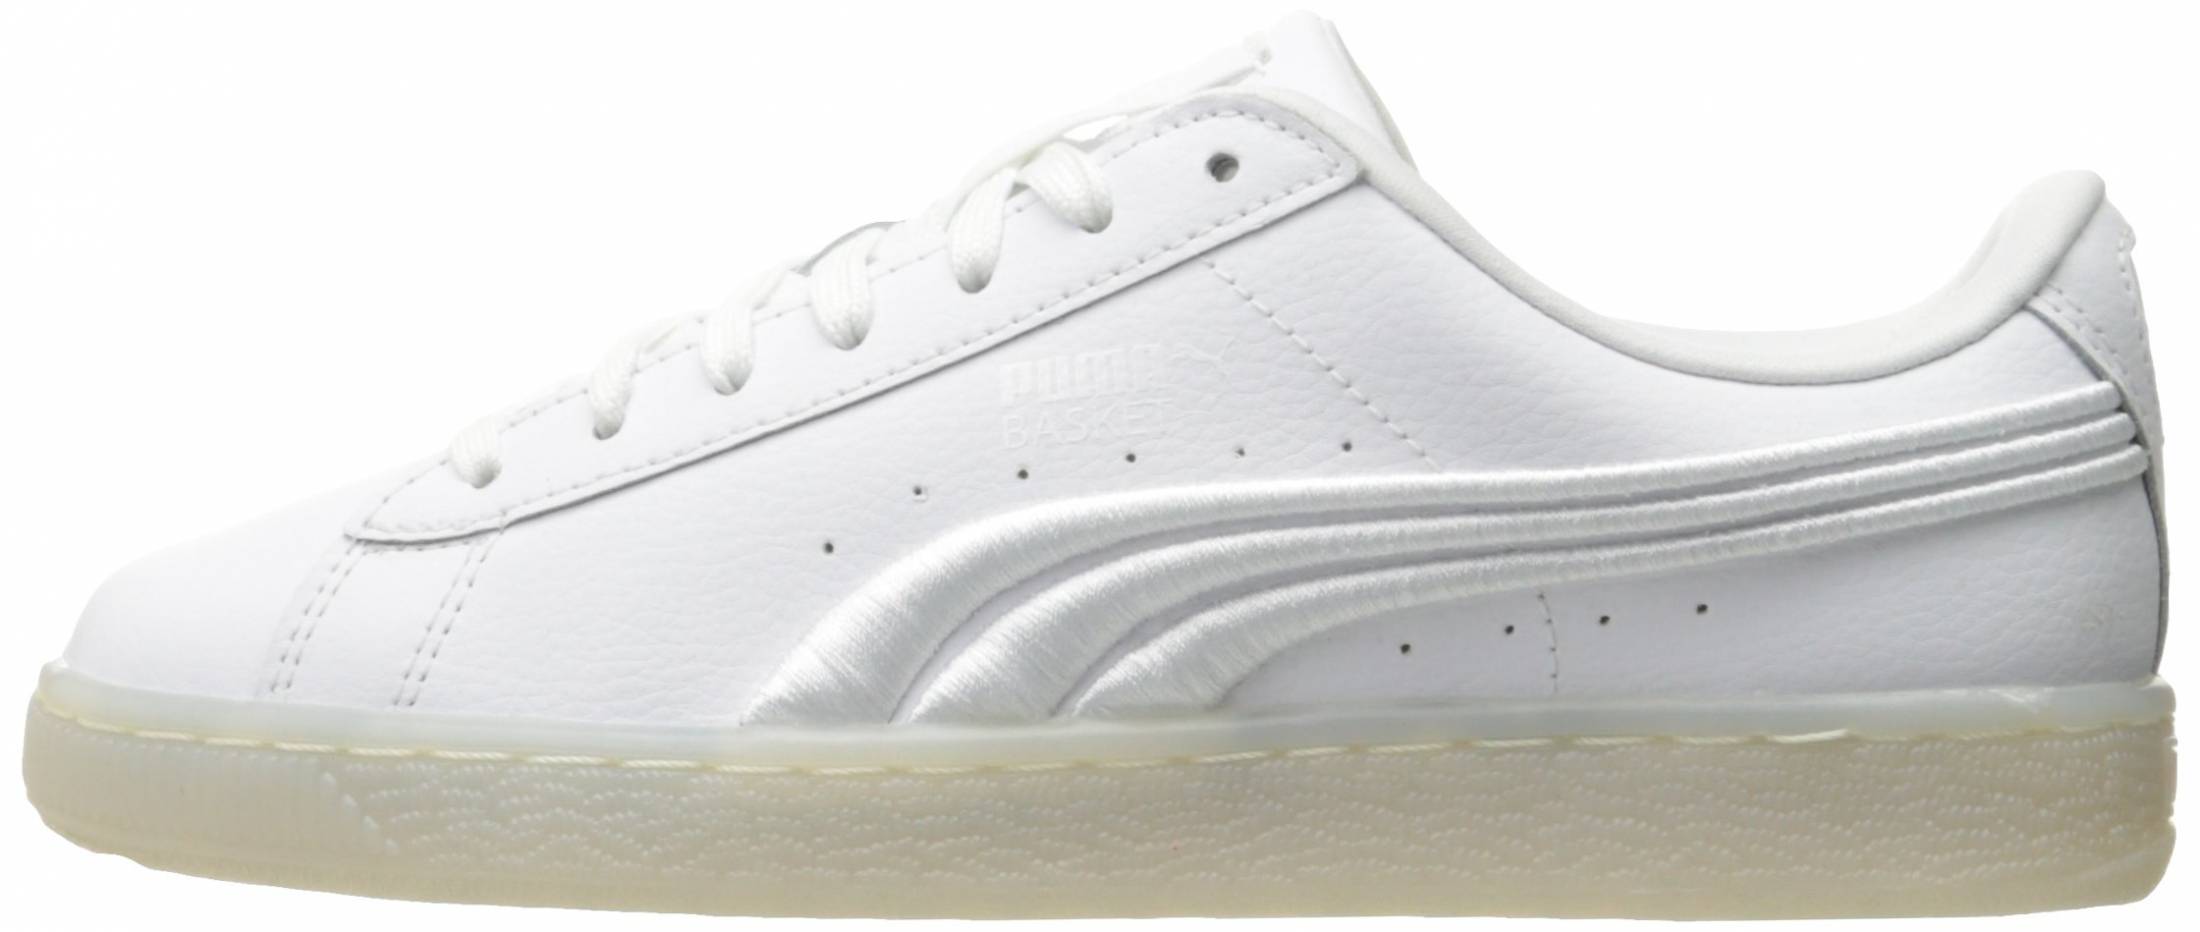 puma all white tennis shoes